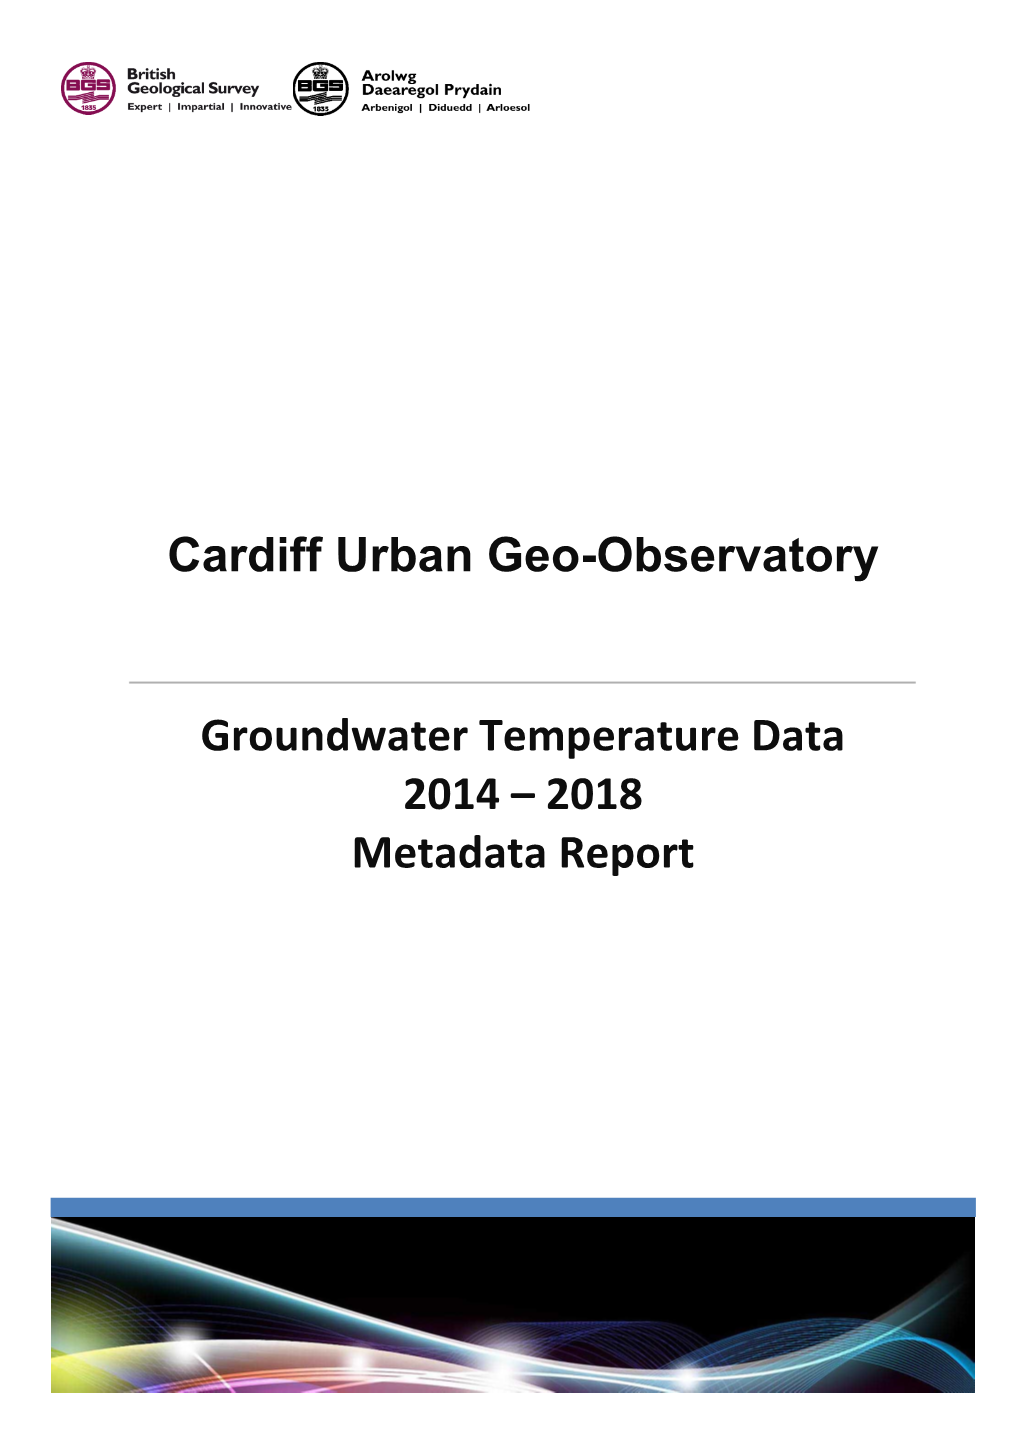 Cardiff Urban Geo-Observatory GROUNDWATER TEMPERATURE DATA 2014 – 2018 METADATA REPORT